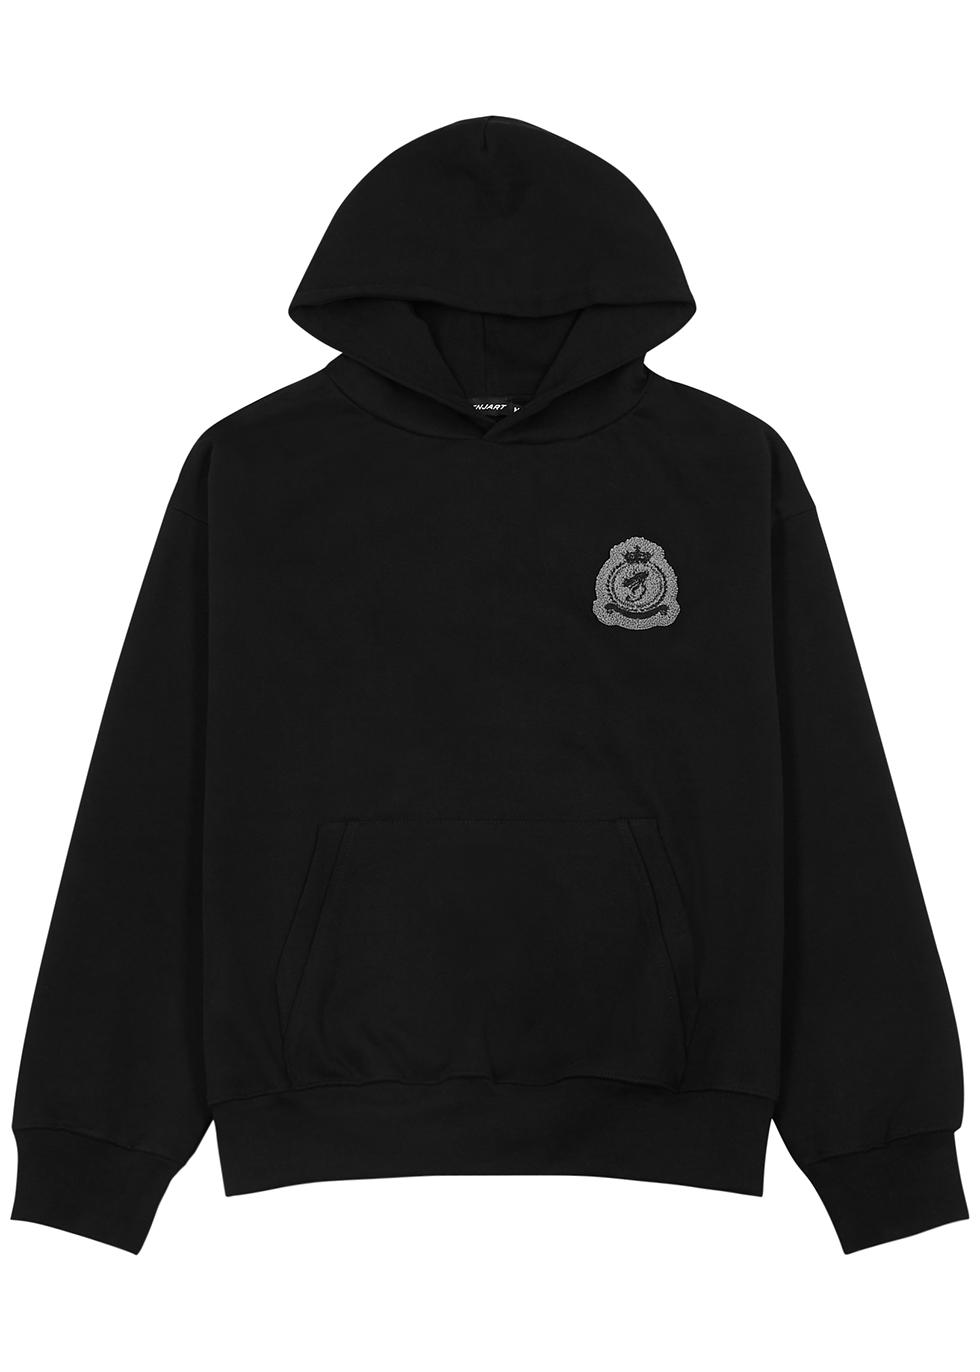 Black logo hoodied cotton sweatshirt by BENJART